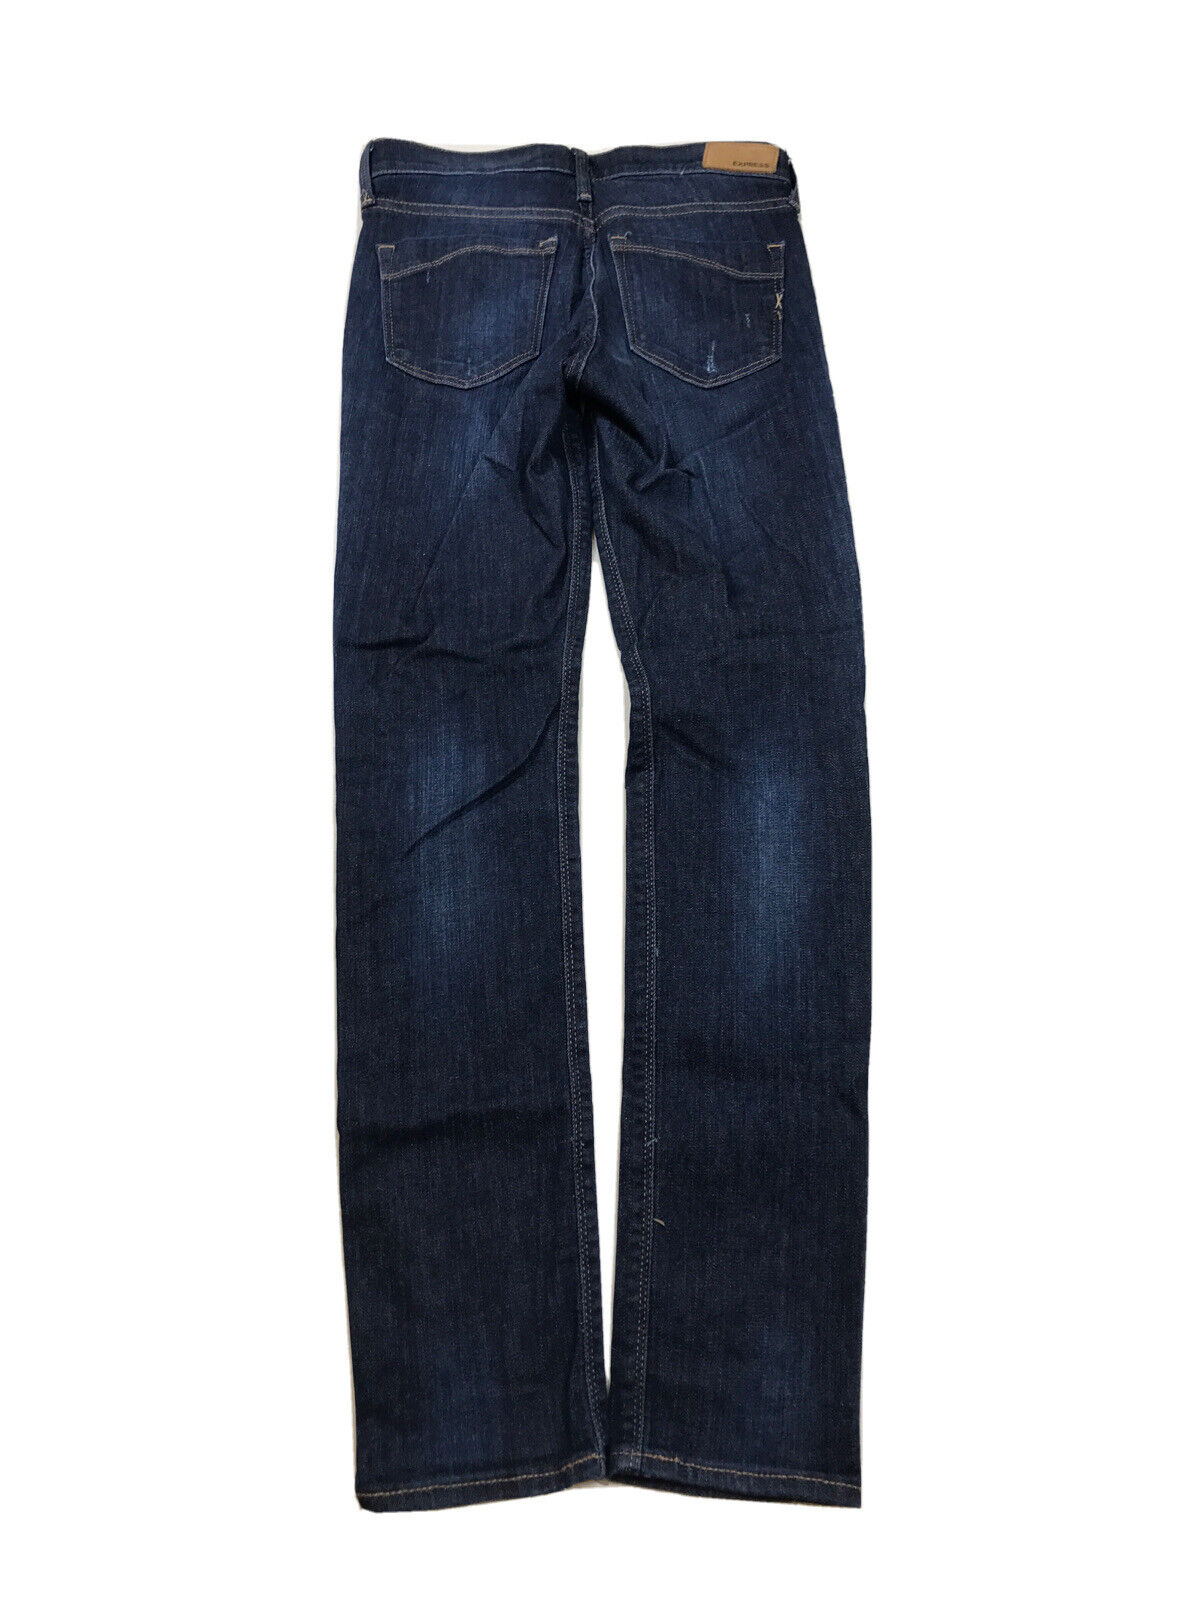 Express Women's Dark Wash Distressed Super Skinny Mid Rise Jeans - 0